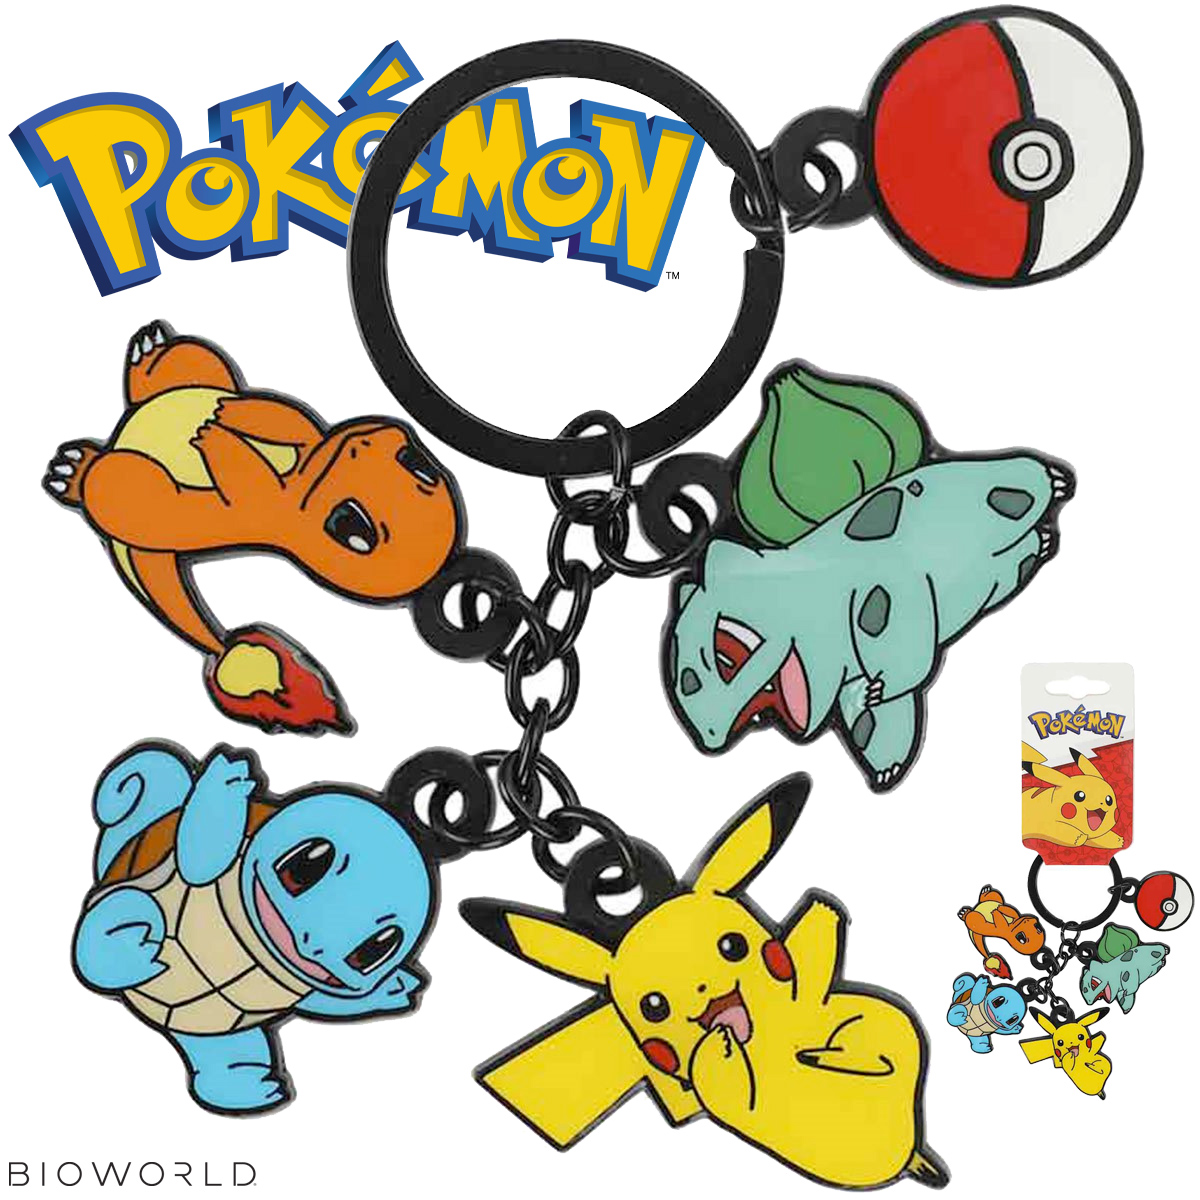 Chaveiro Pokémon com Pikachu, Charmander, Bulbasaur e Squirtle